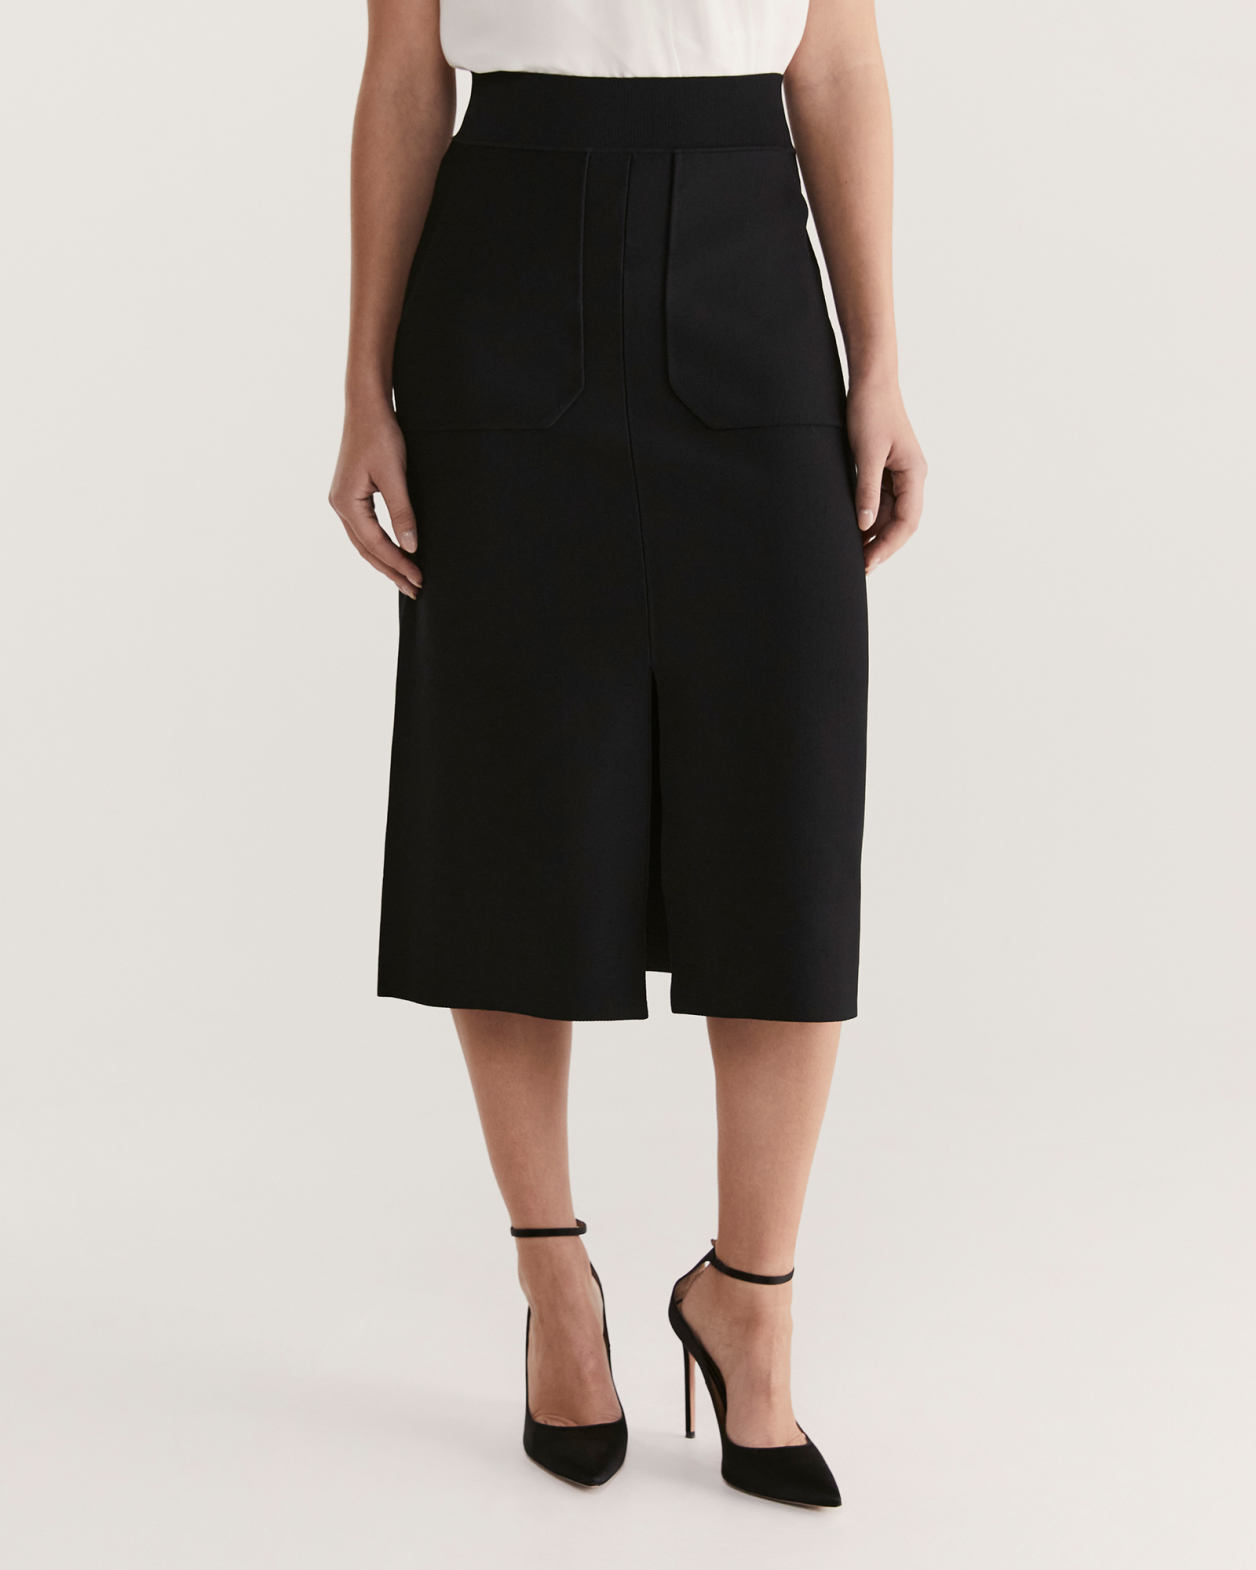 Amara Milano Fluted Skirt in BLACK